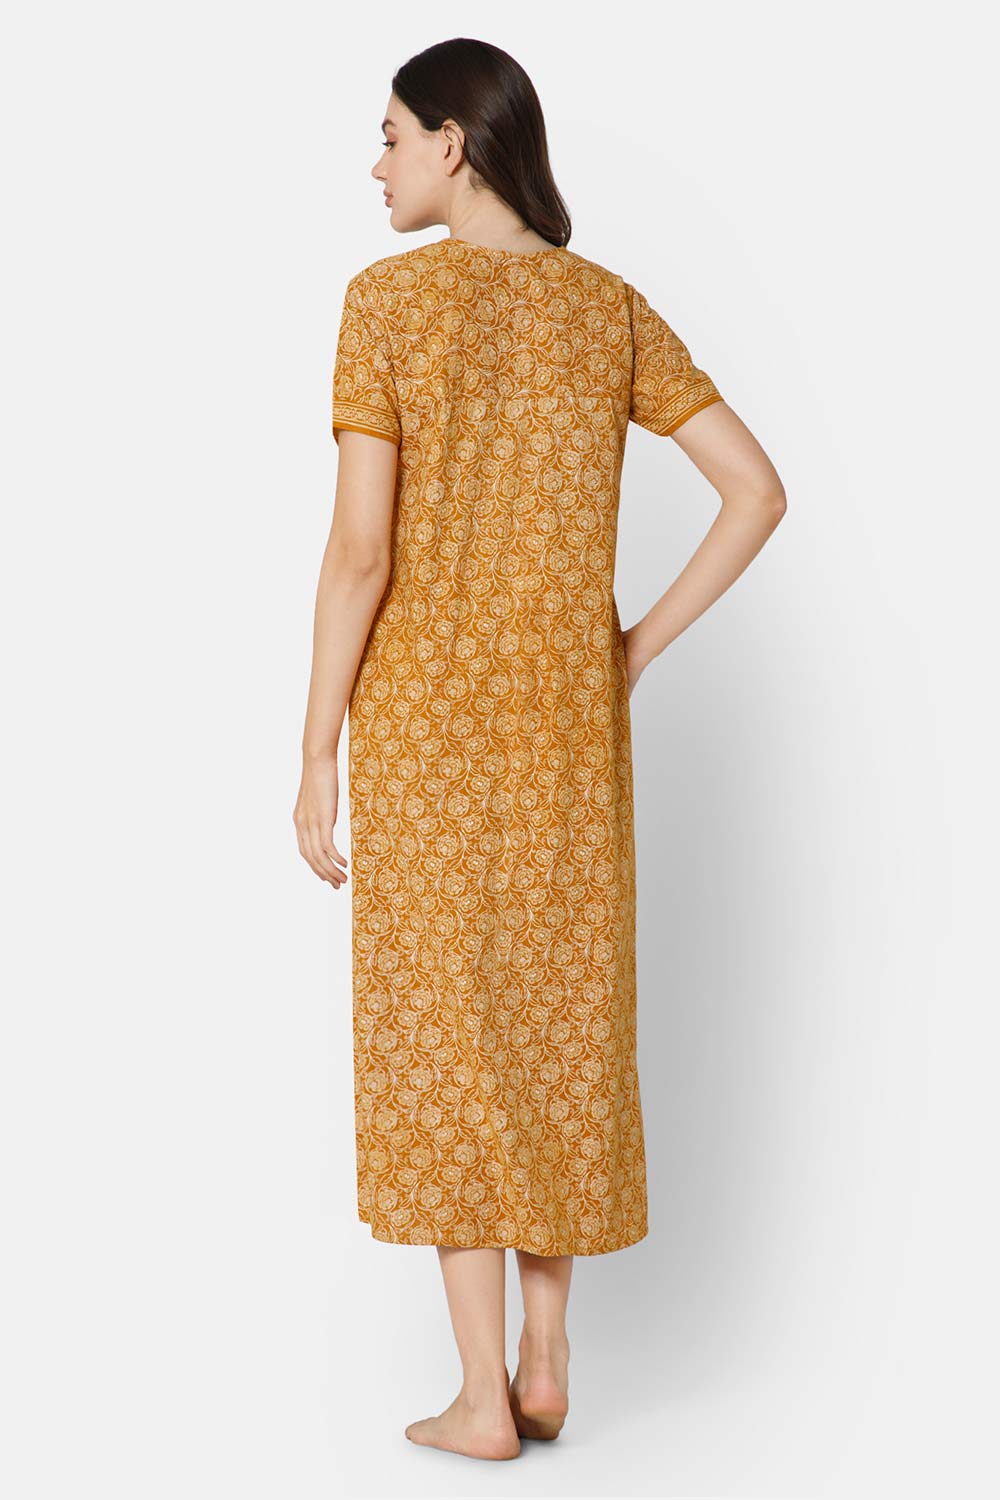 Naidu Hall A-line Women's Nighty Full Length Half Sleeve  - Mustard - R136